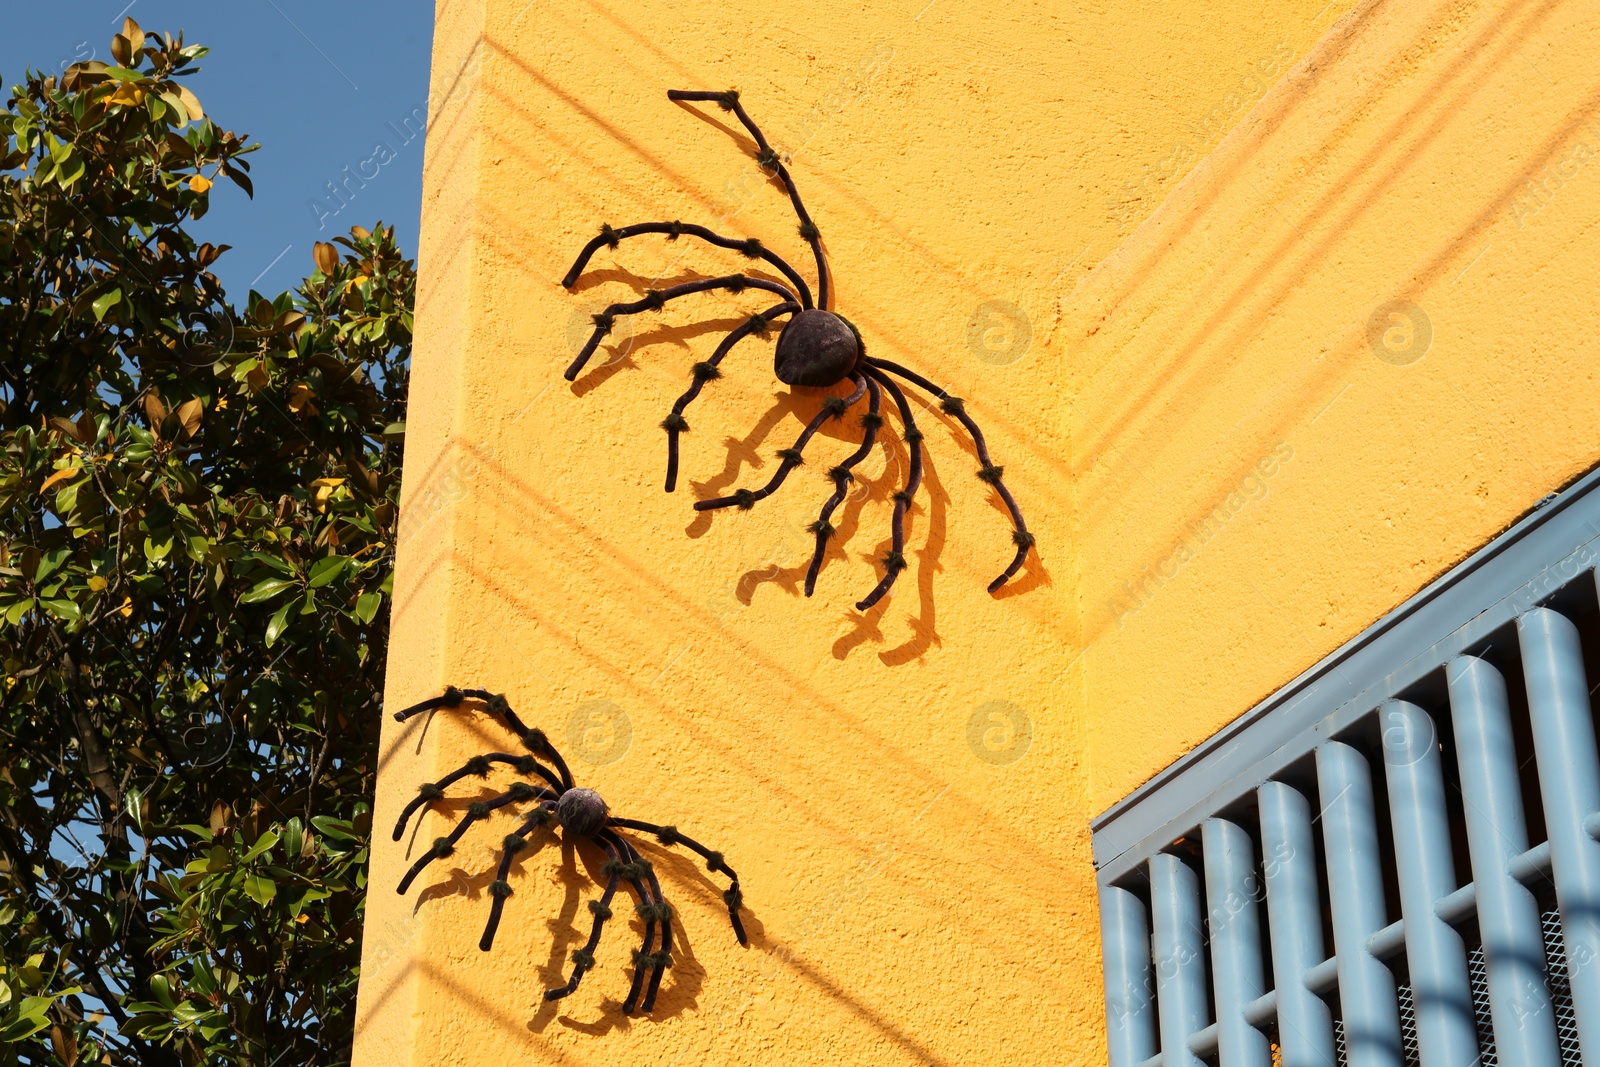 Photo of Big creepy spiders on yellow building wall. Halloween decor